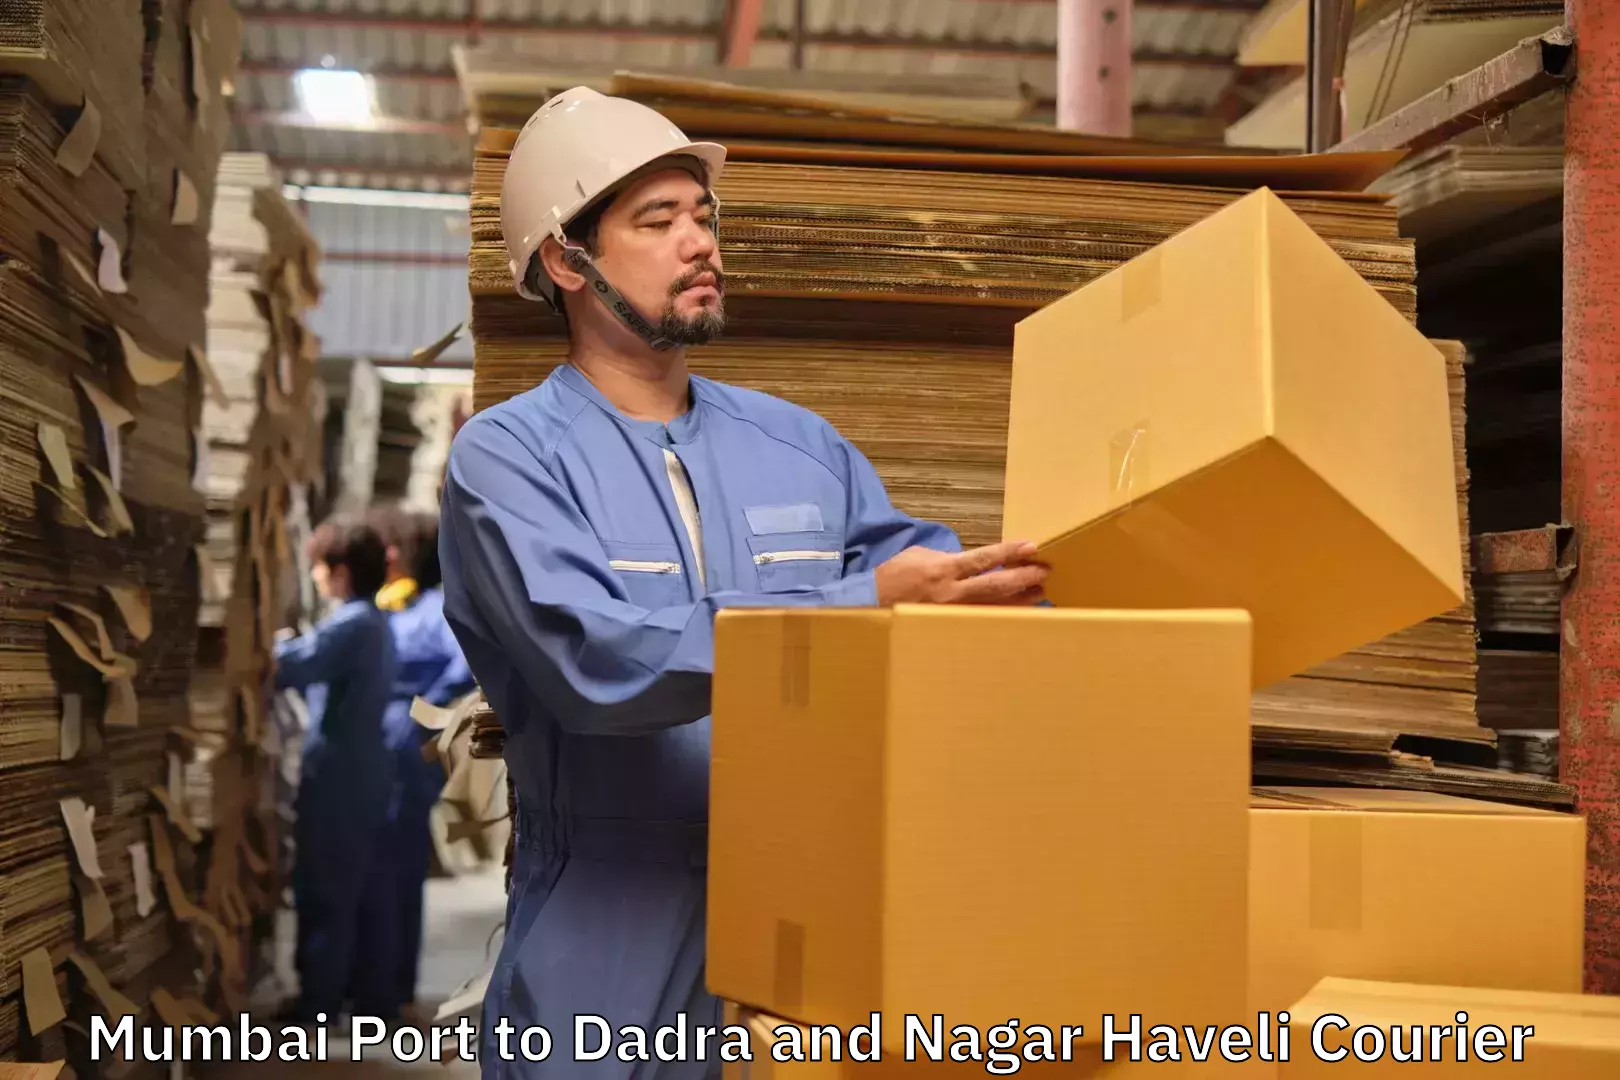 Luggage delivery estimate Mumbai Port to Dadra and Nagar Haveli